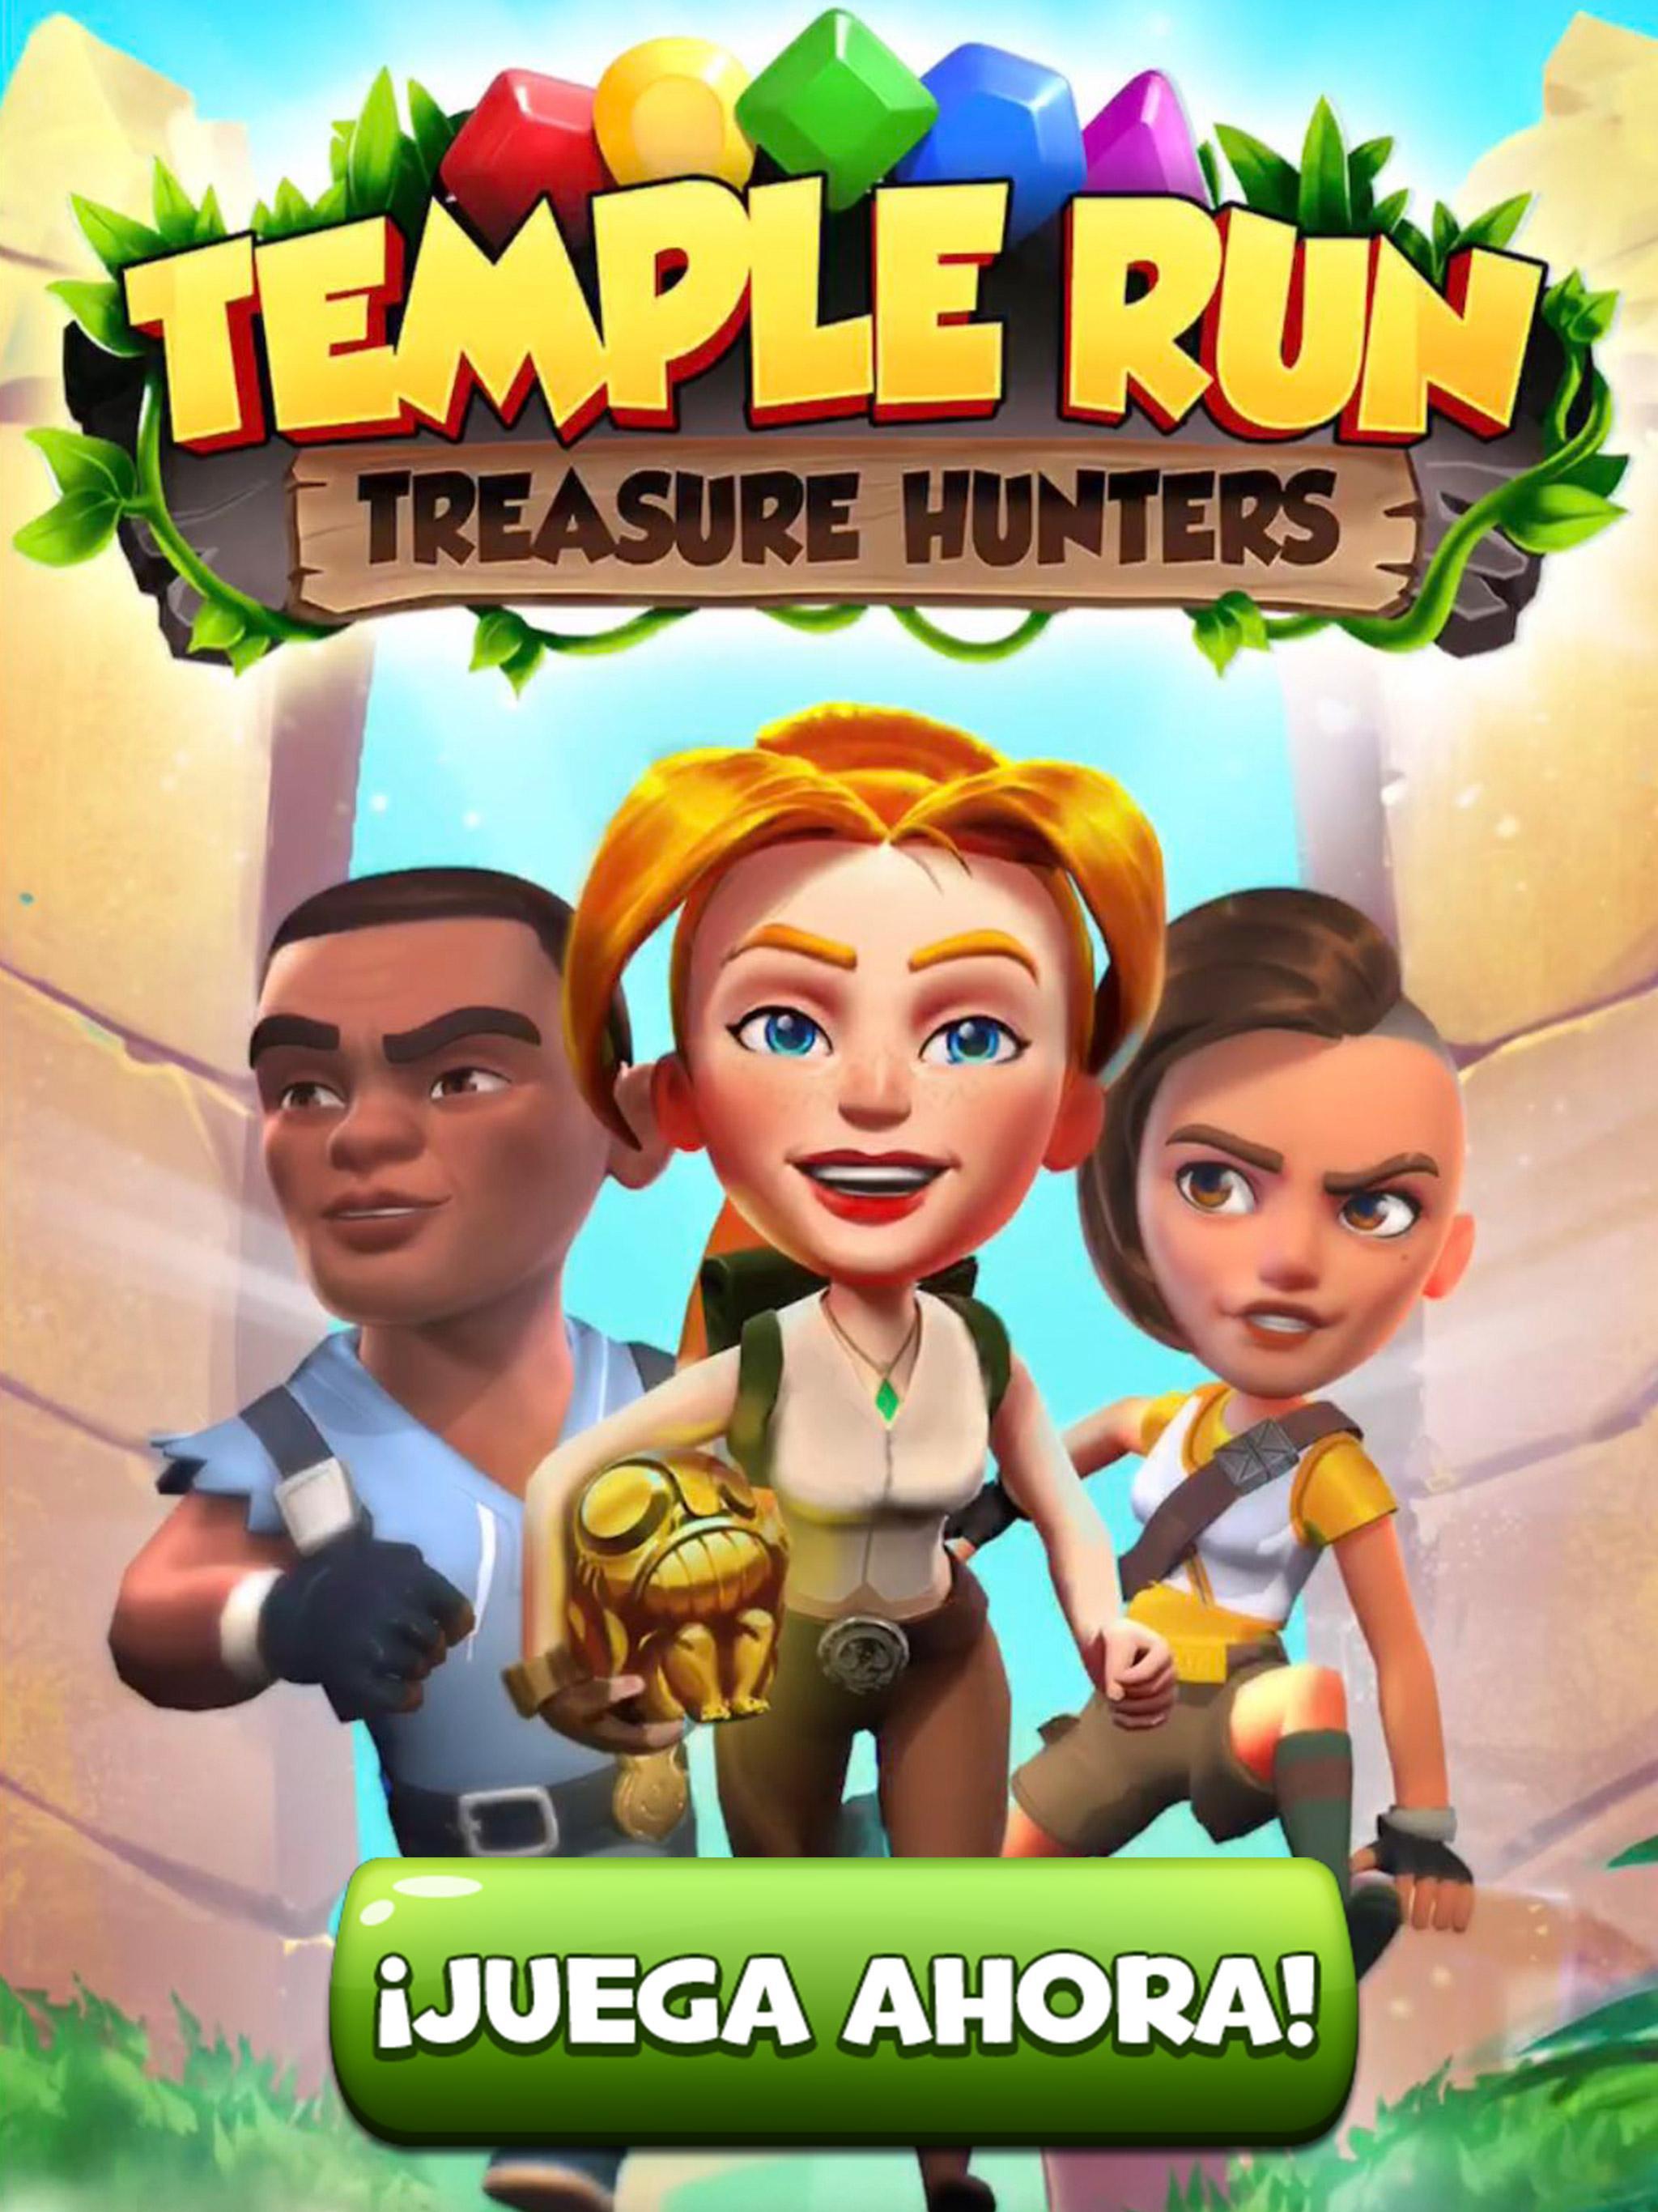 Temple Run Treasure Hunters For Android Apk Download - temple run on roblox roblox